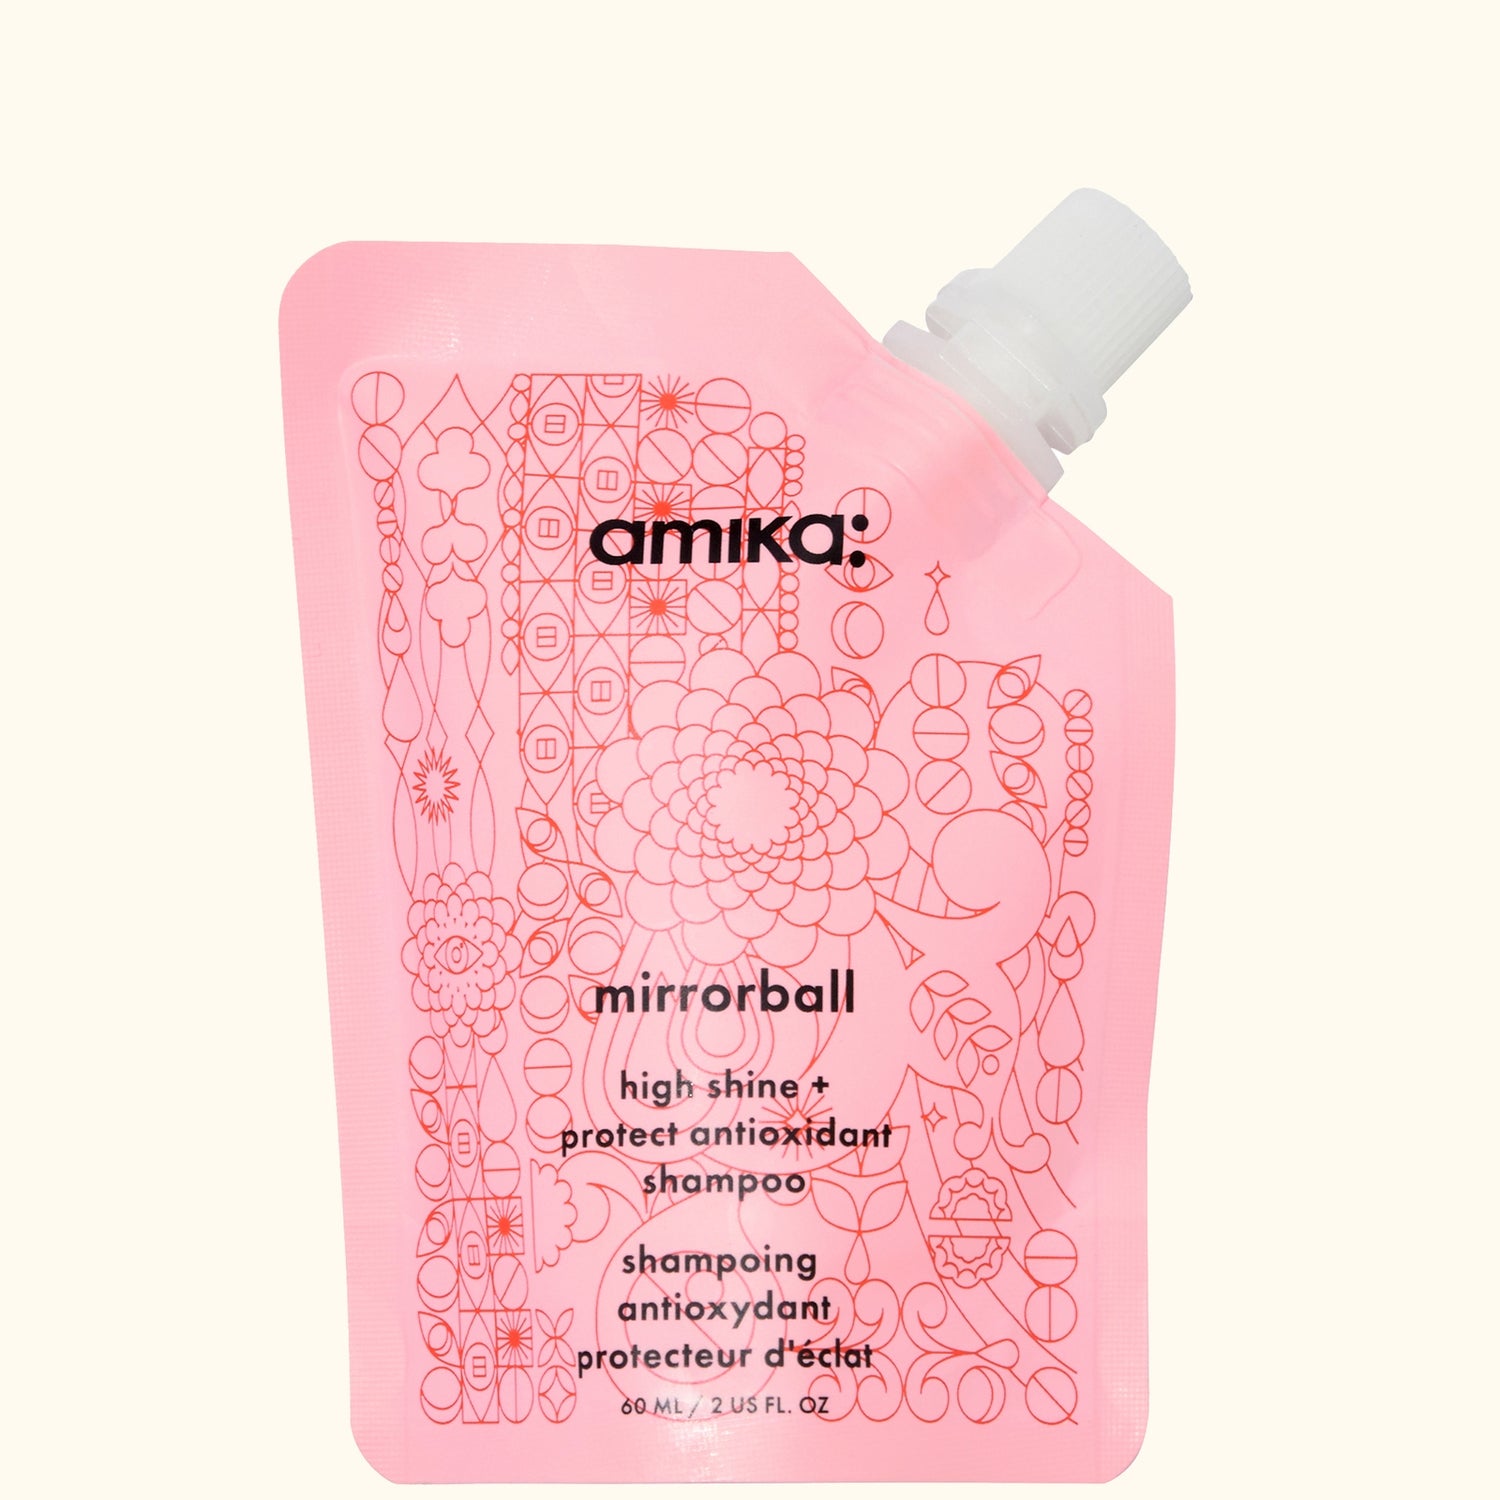 mirrorball high shine + protect antioxidant shampoo